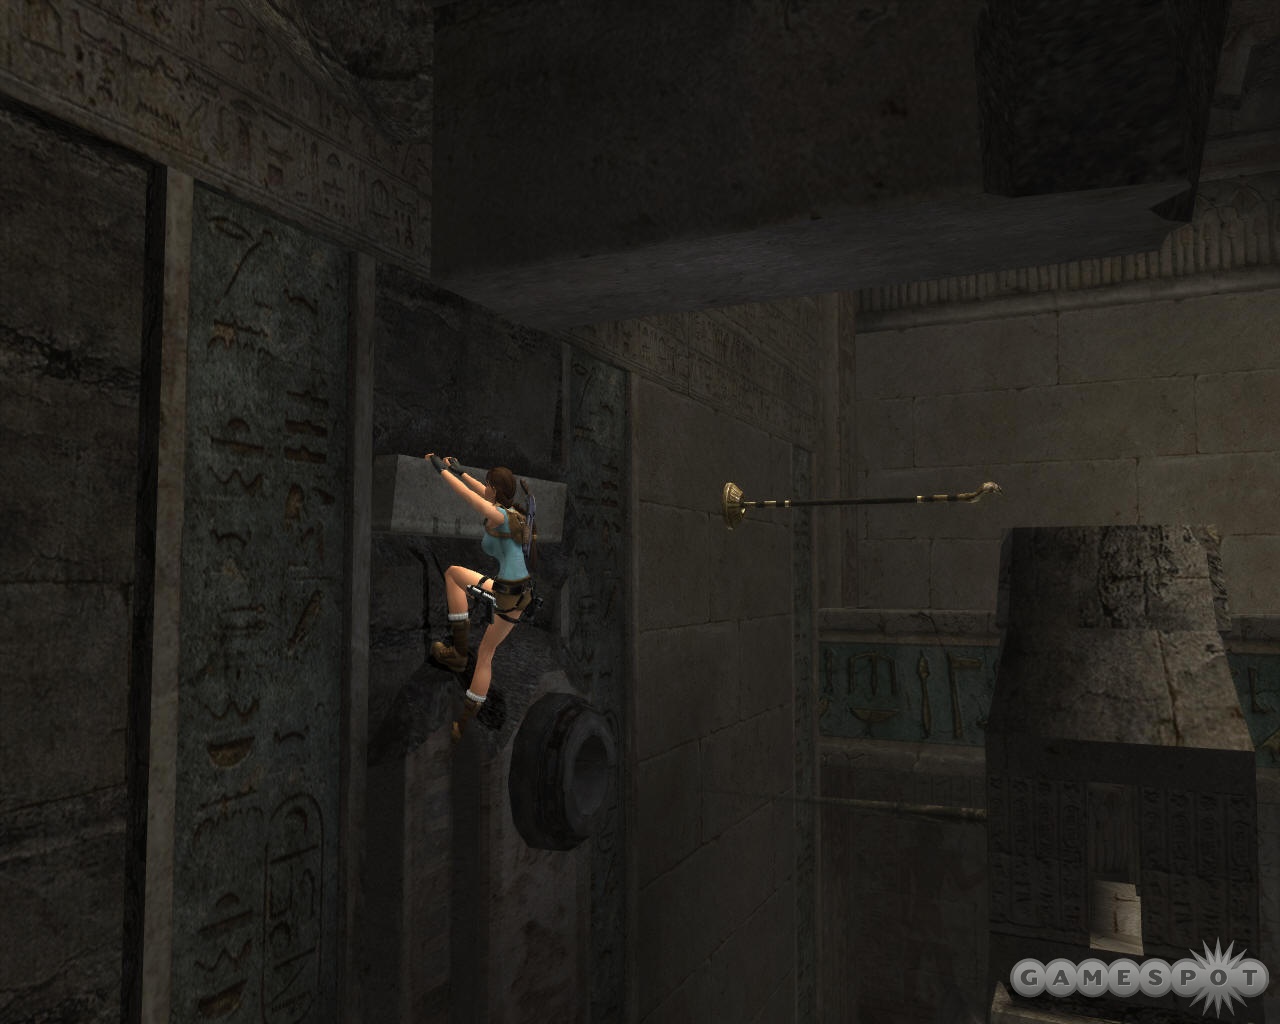 Video game vixen Lara Croft is back in this remake of her original adventure.